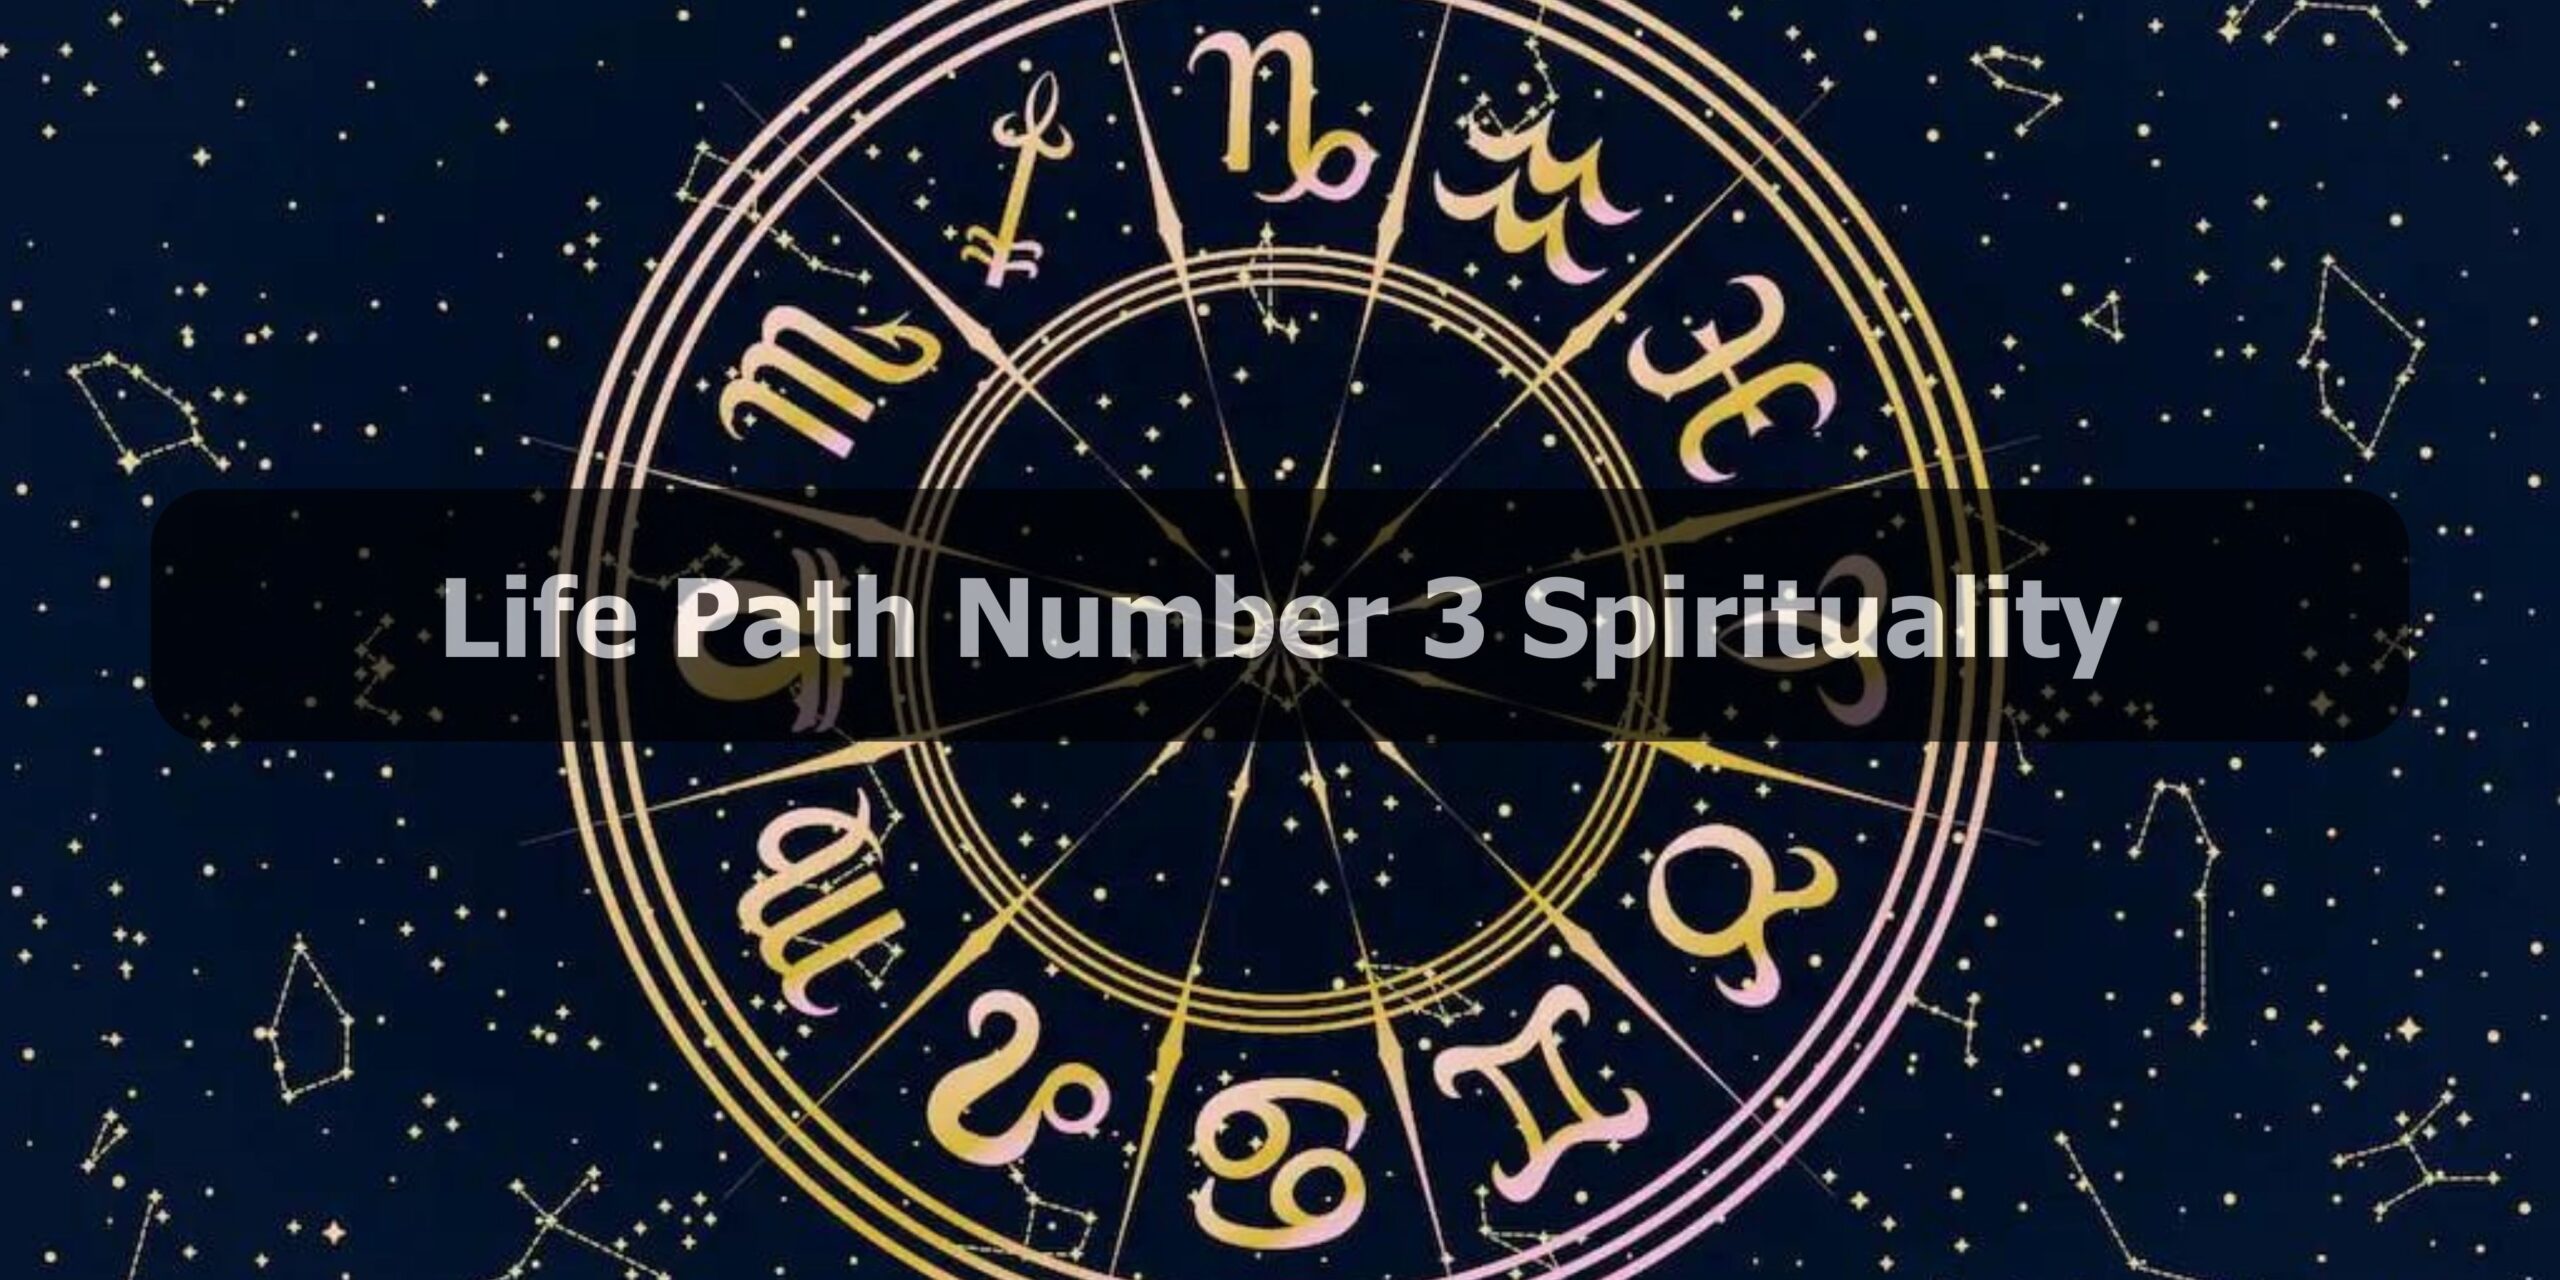 Life Path Number 3 Spirituality